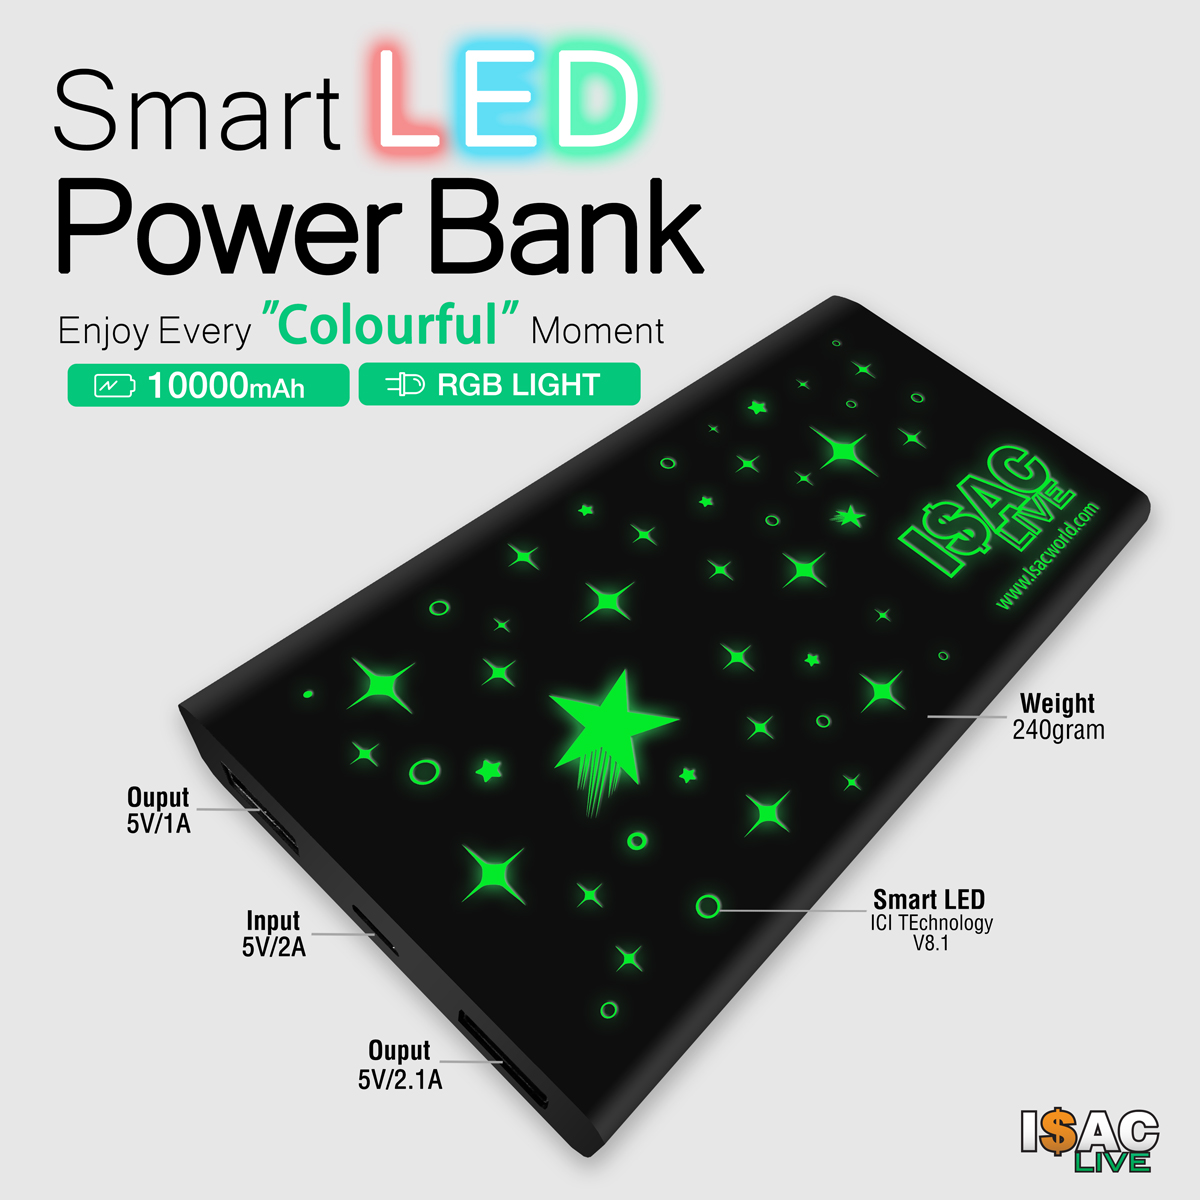 Isaclive Smart LED Powerbank